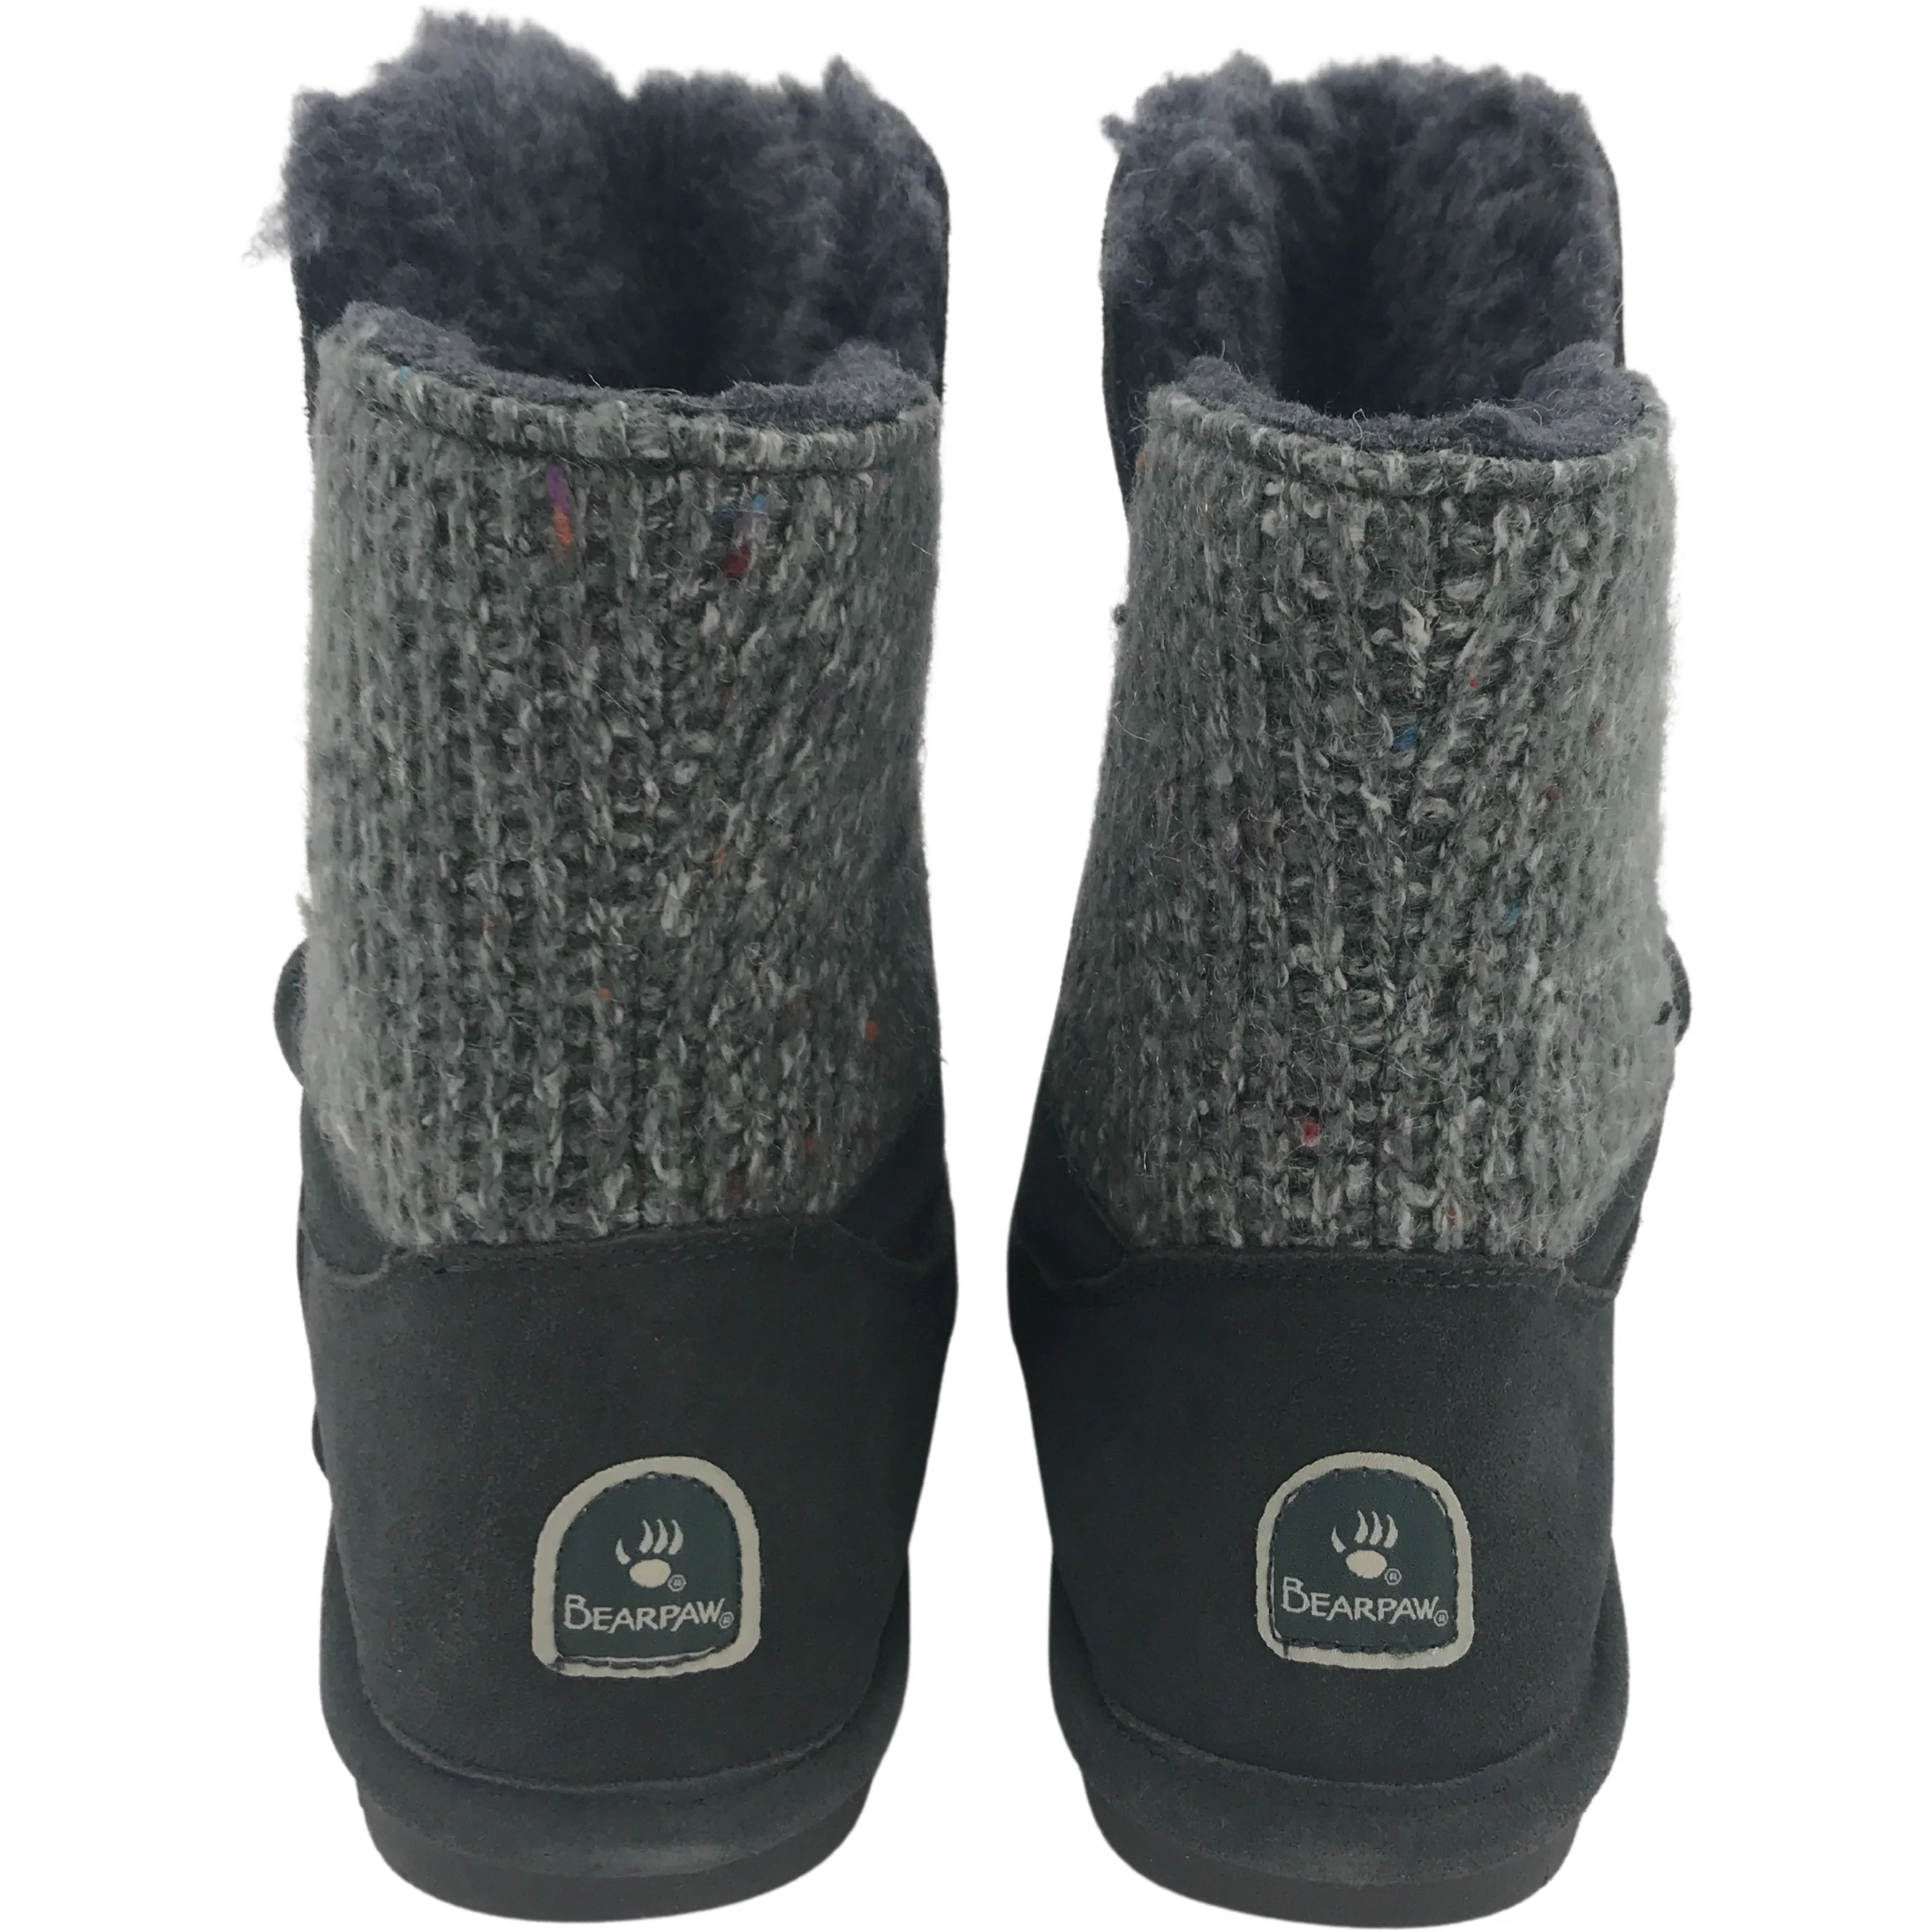 BearPaw Women's Winter Boots / Short Winter Boots / Geneva Knitted Boots / Grey / Size 9 **LIKE NEW**